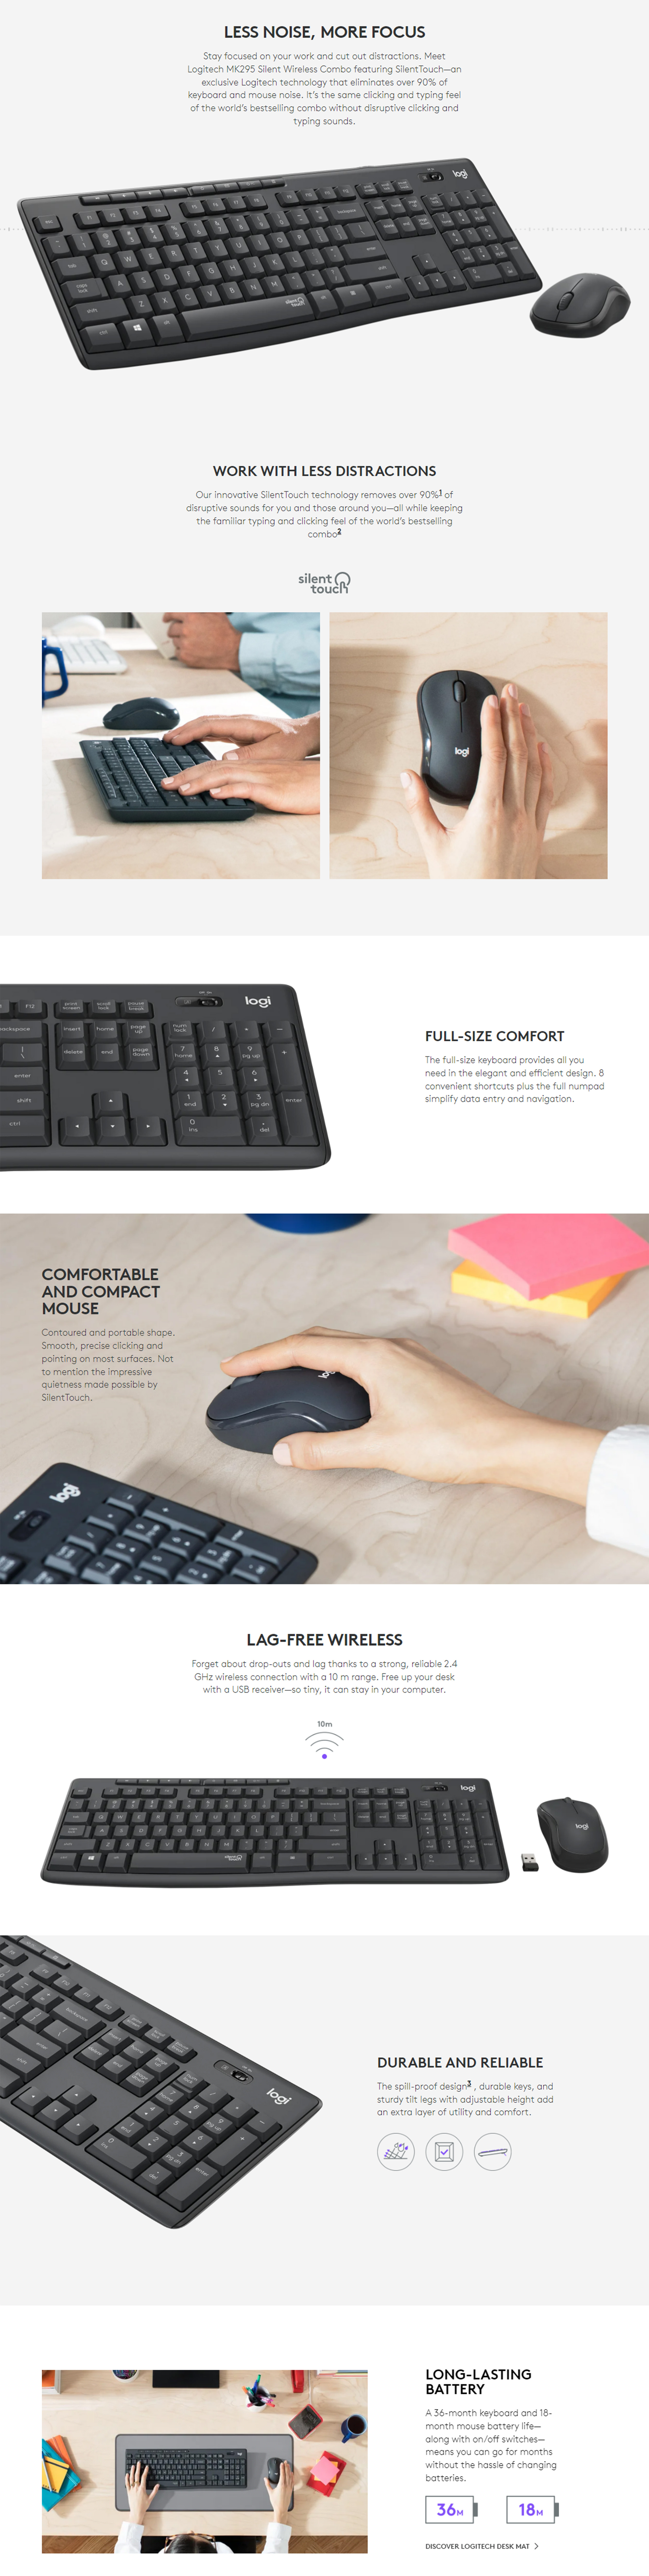 Keyboards-Logitech-MK295-Silent-Wireless-Keyboard-and-Mouse-Combo-2